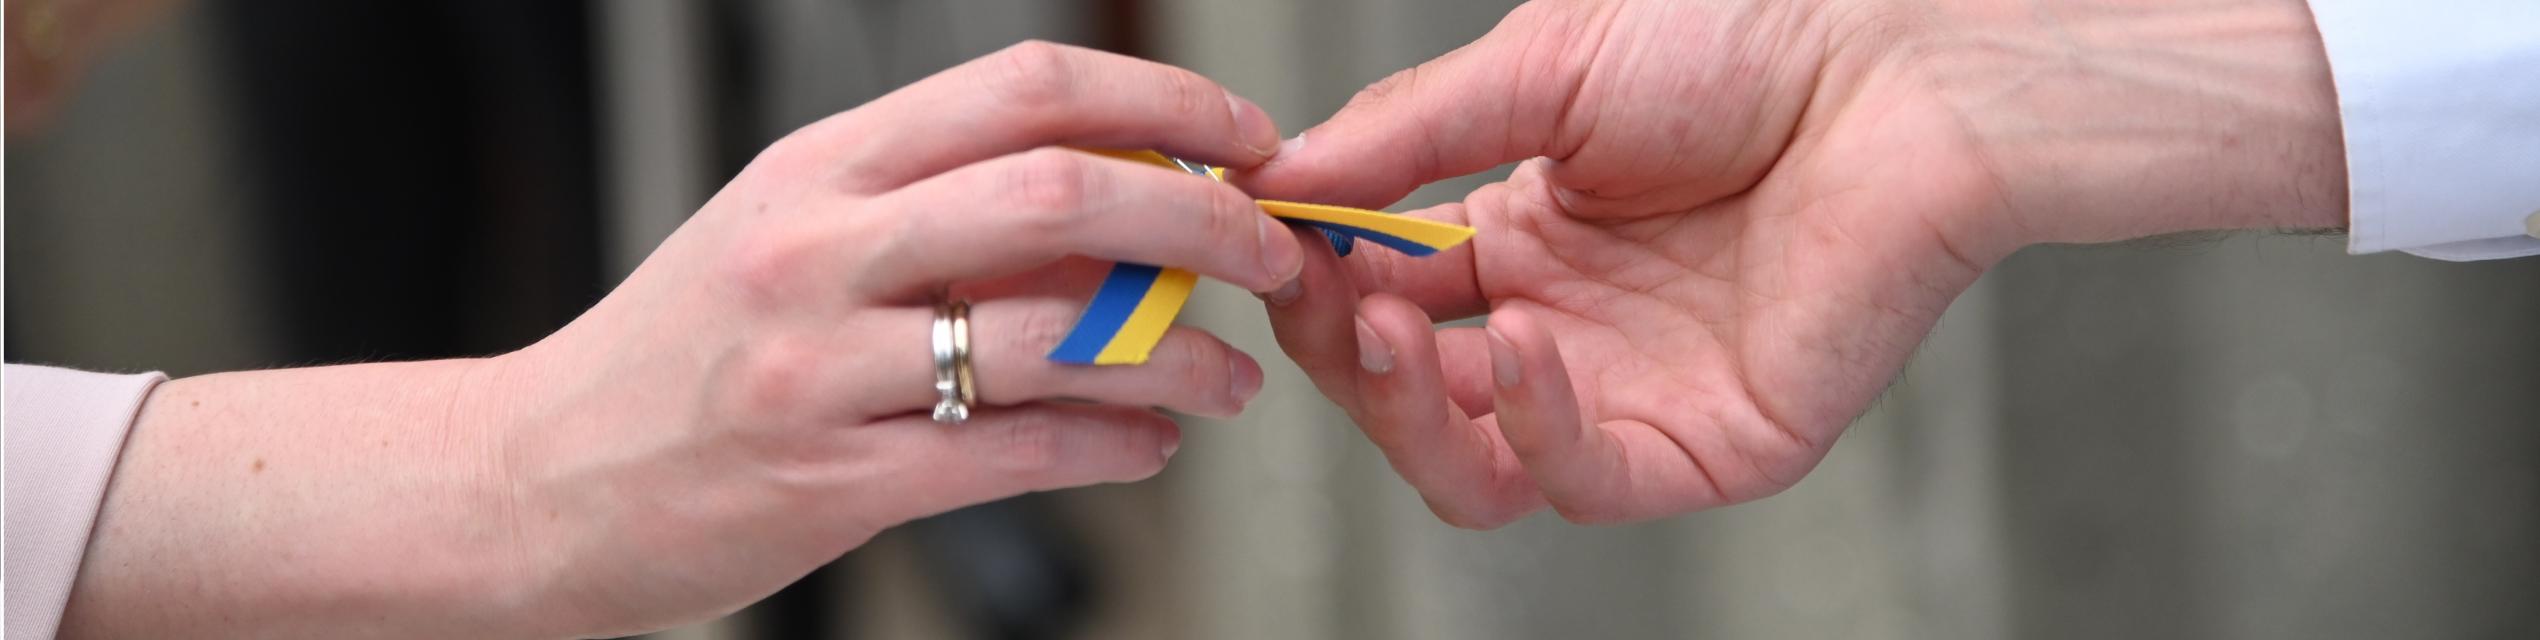 Pin showcasing EU support to Ukraine